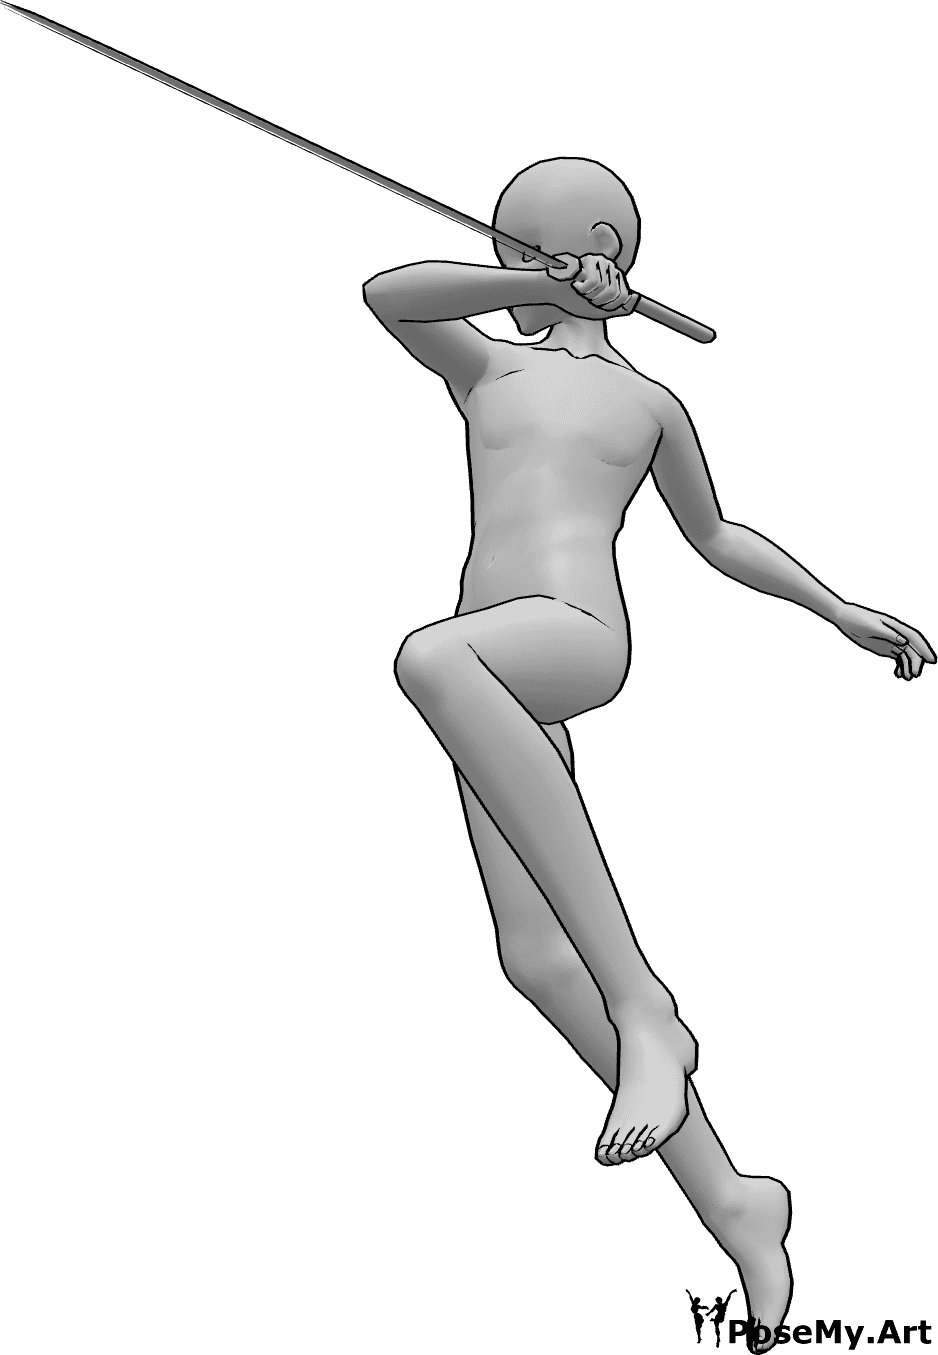 Referencia de poses- Postura de ataque con katana - Hombre anime está atacando, saltando alto para apuñalar con su katana en la mano derecha